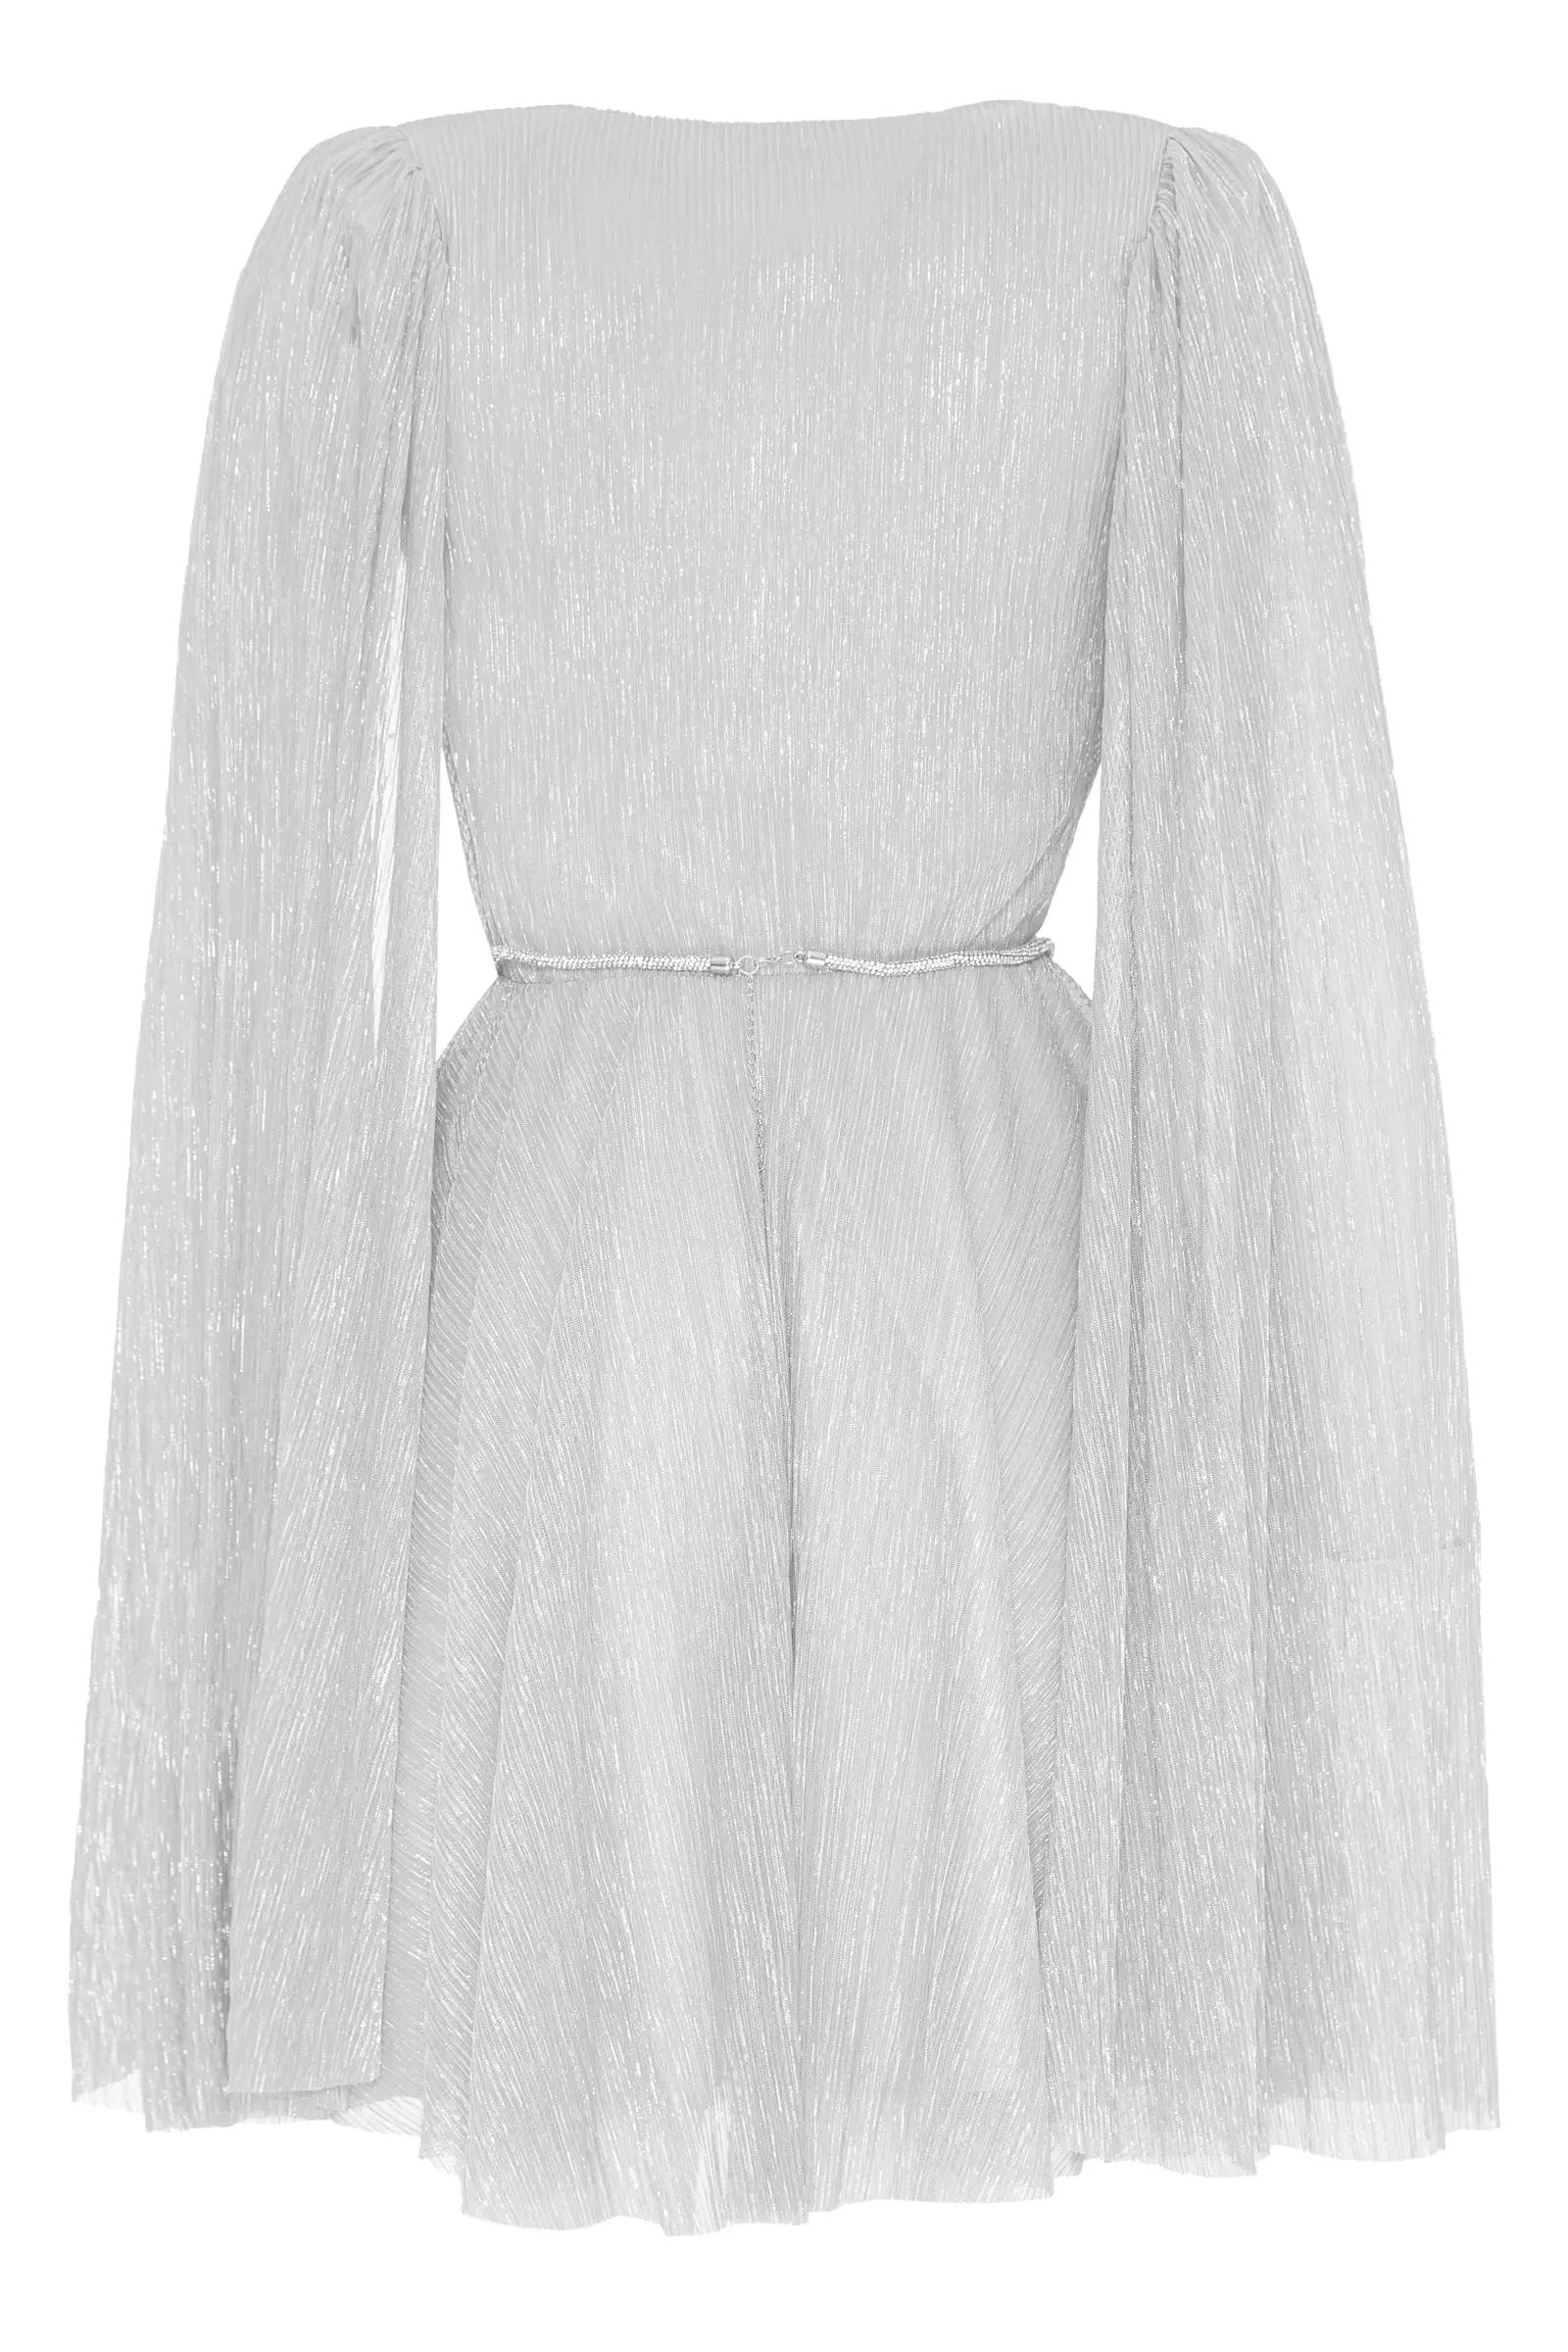 Silver moonlight long sleeve mini dress